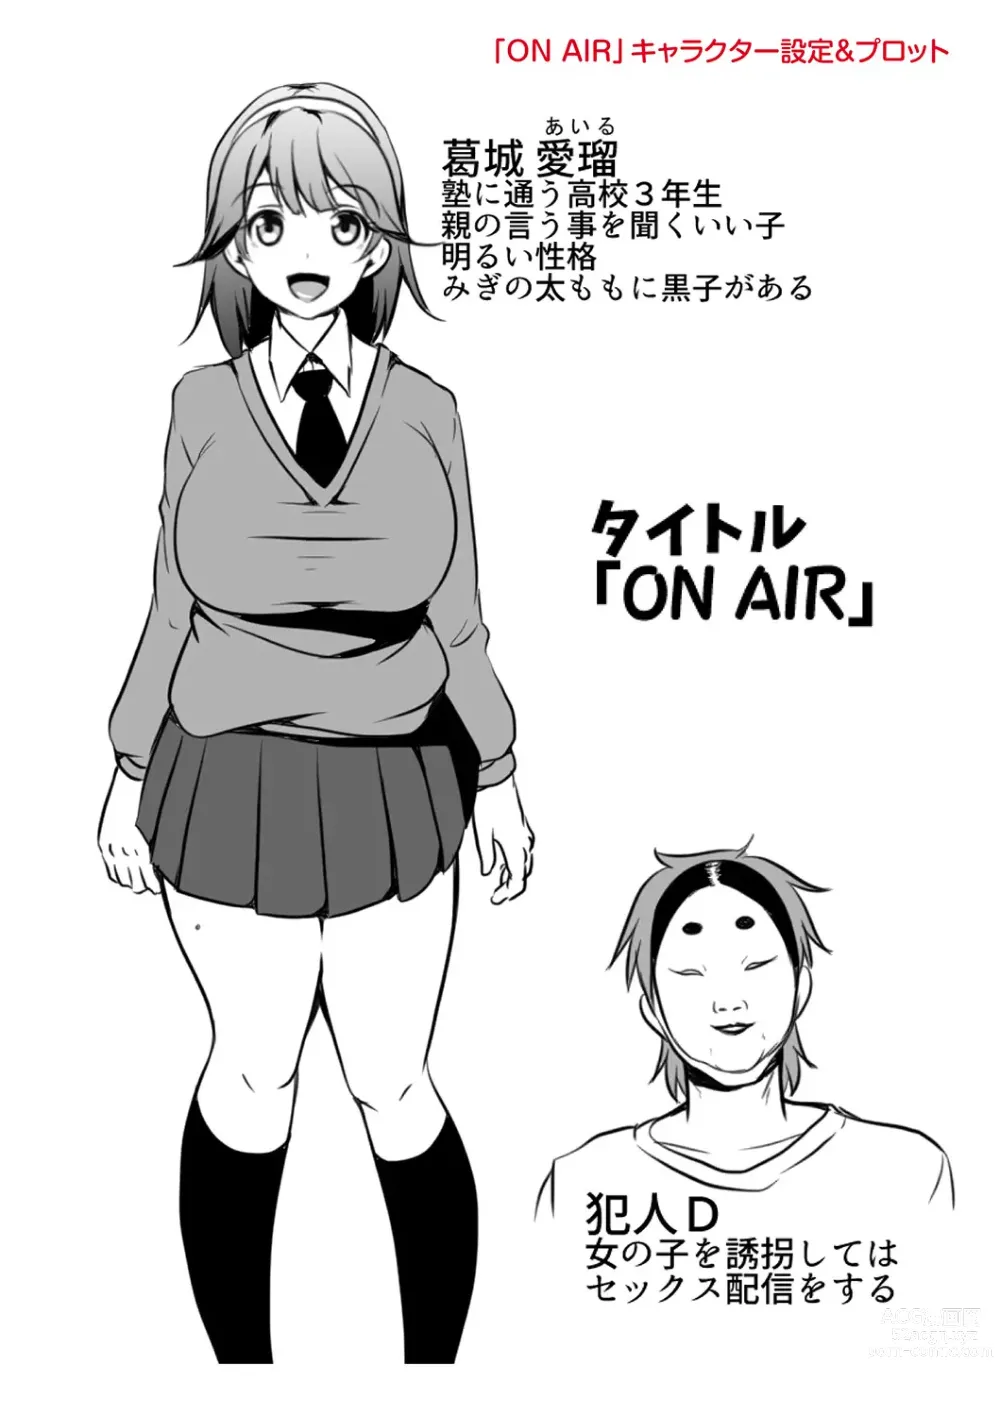 Page 202 of manga Kowashite Asobo + DLsite Gentei Chara Settei & Plot